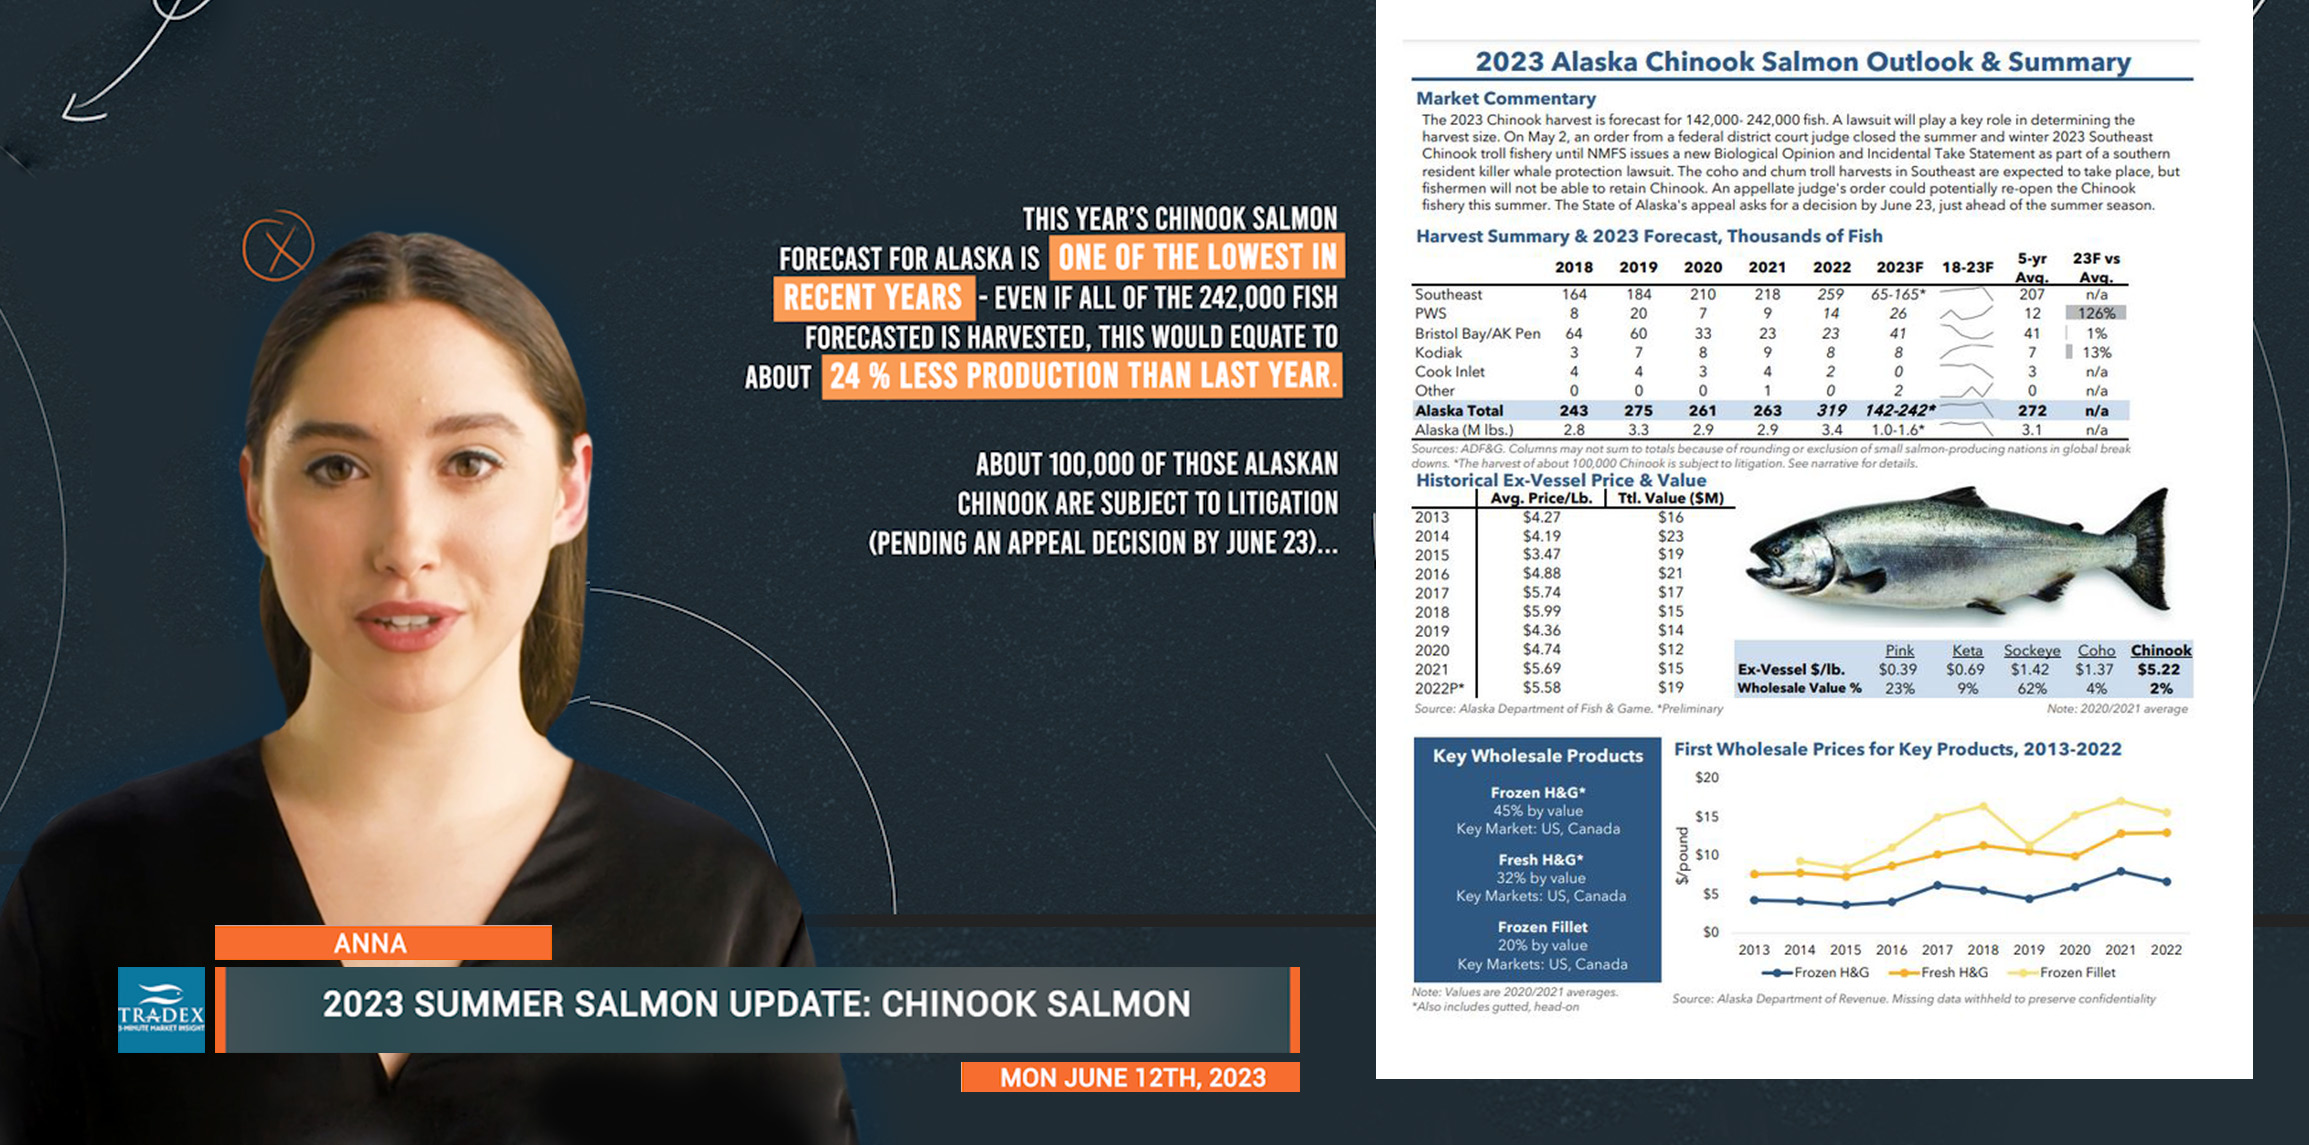 2023 Alaska Cjinook Salmon Outlook & Summary